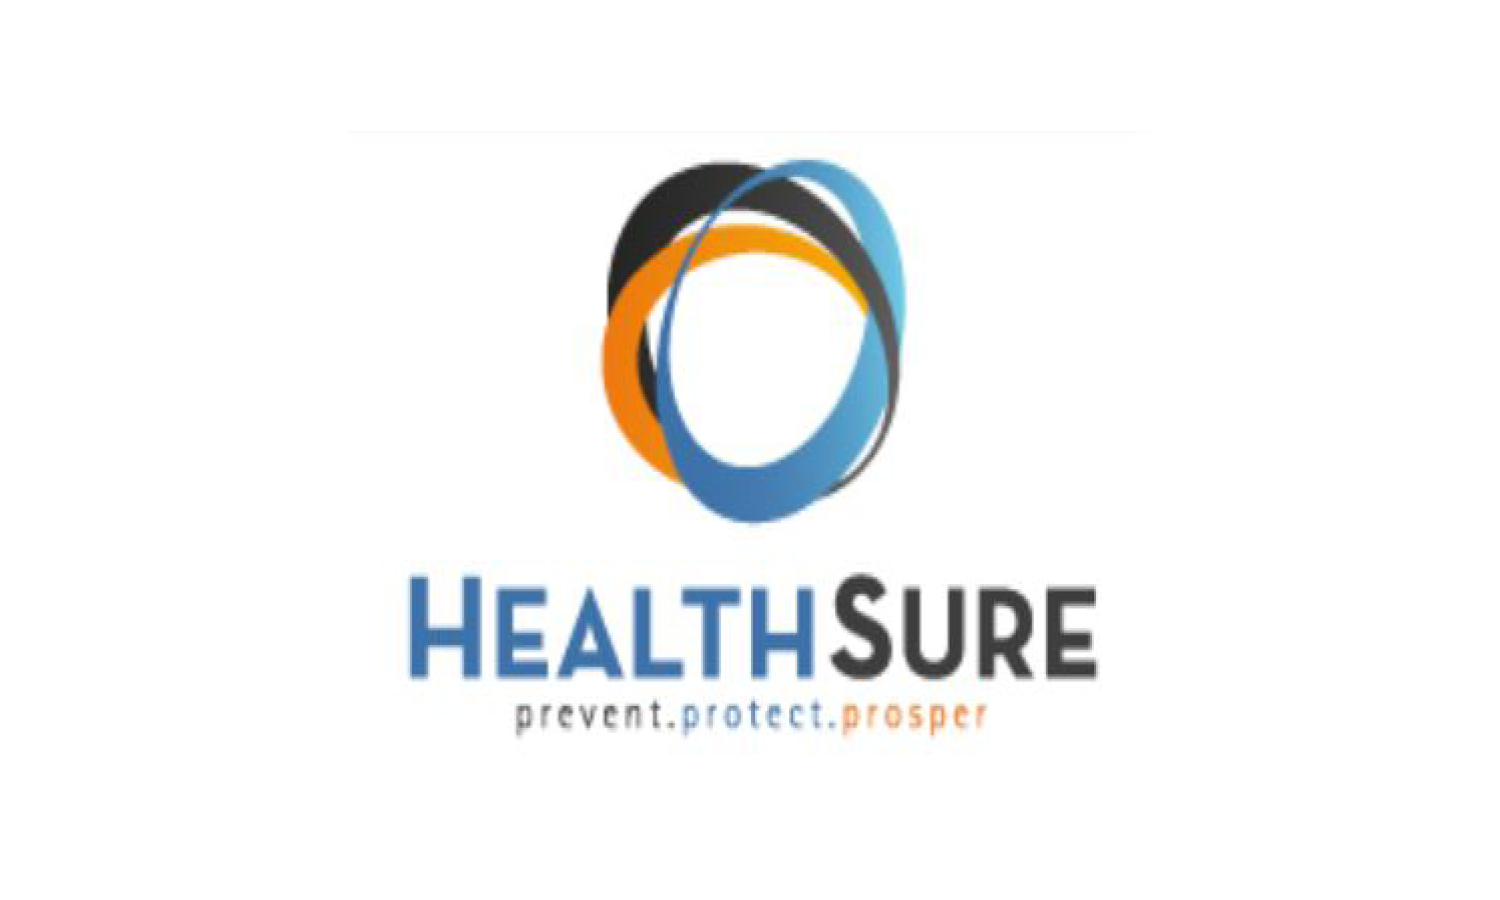 Healthsure logo